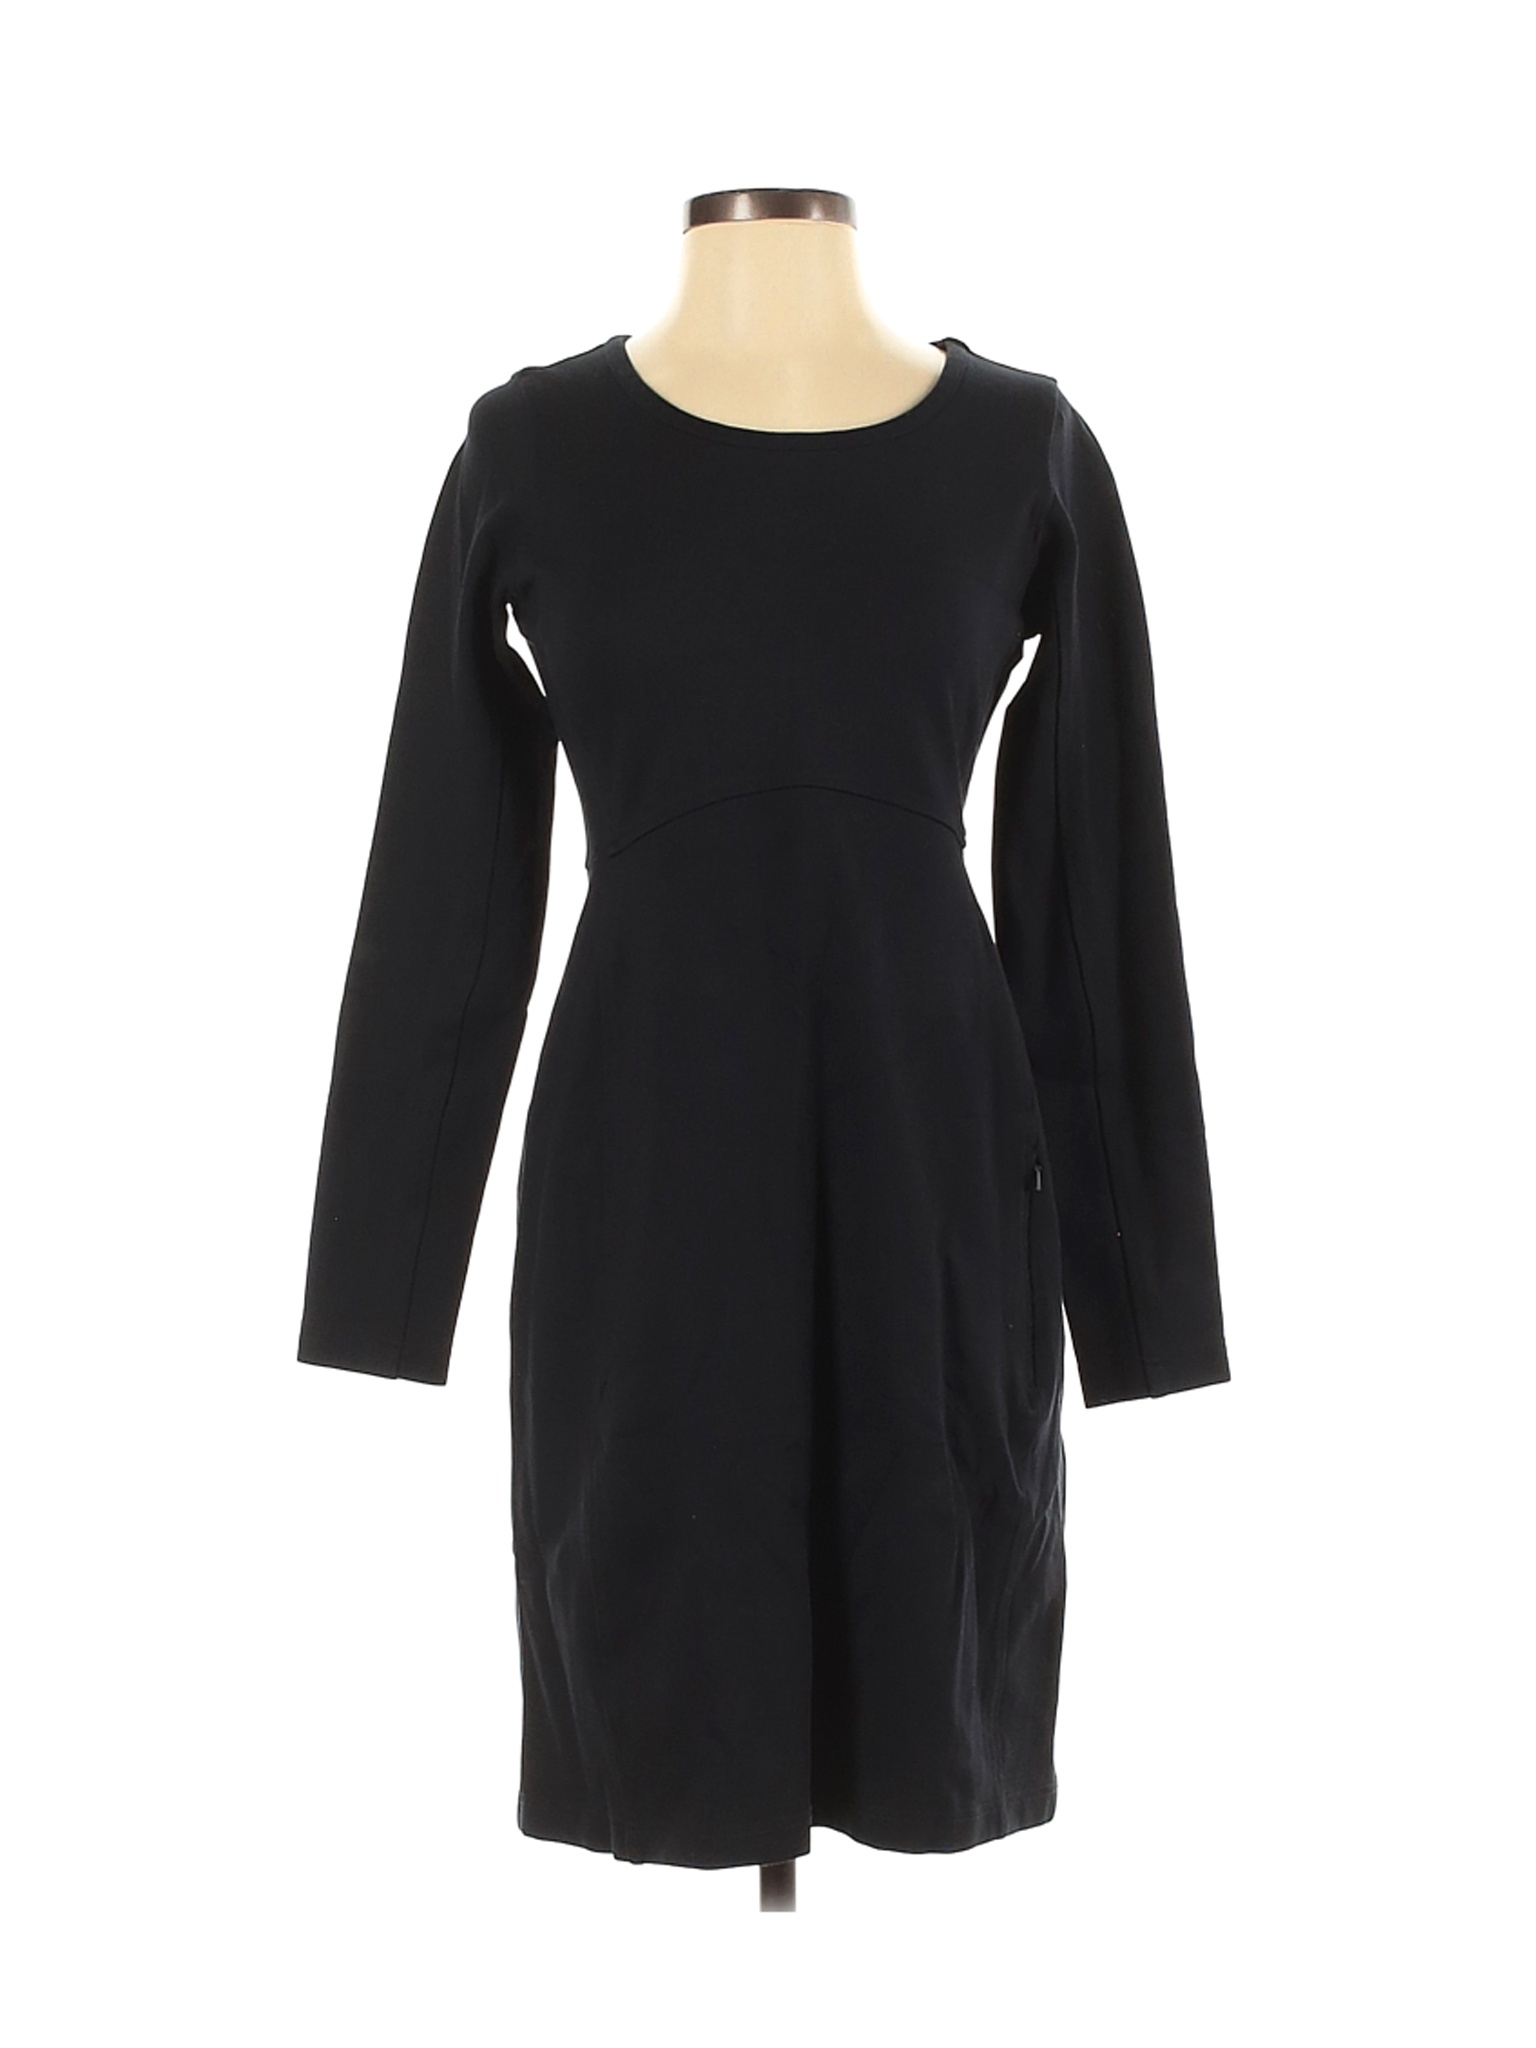 Duluth Trading Co. Women Black Casual Dress XS | eBay